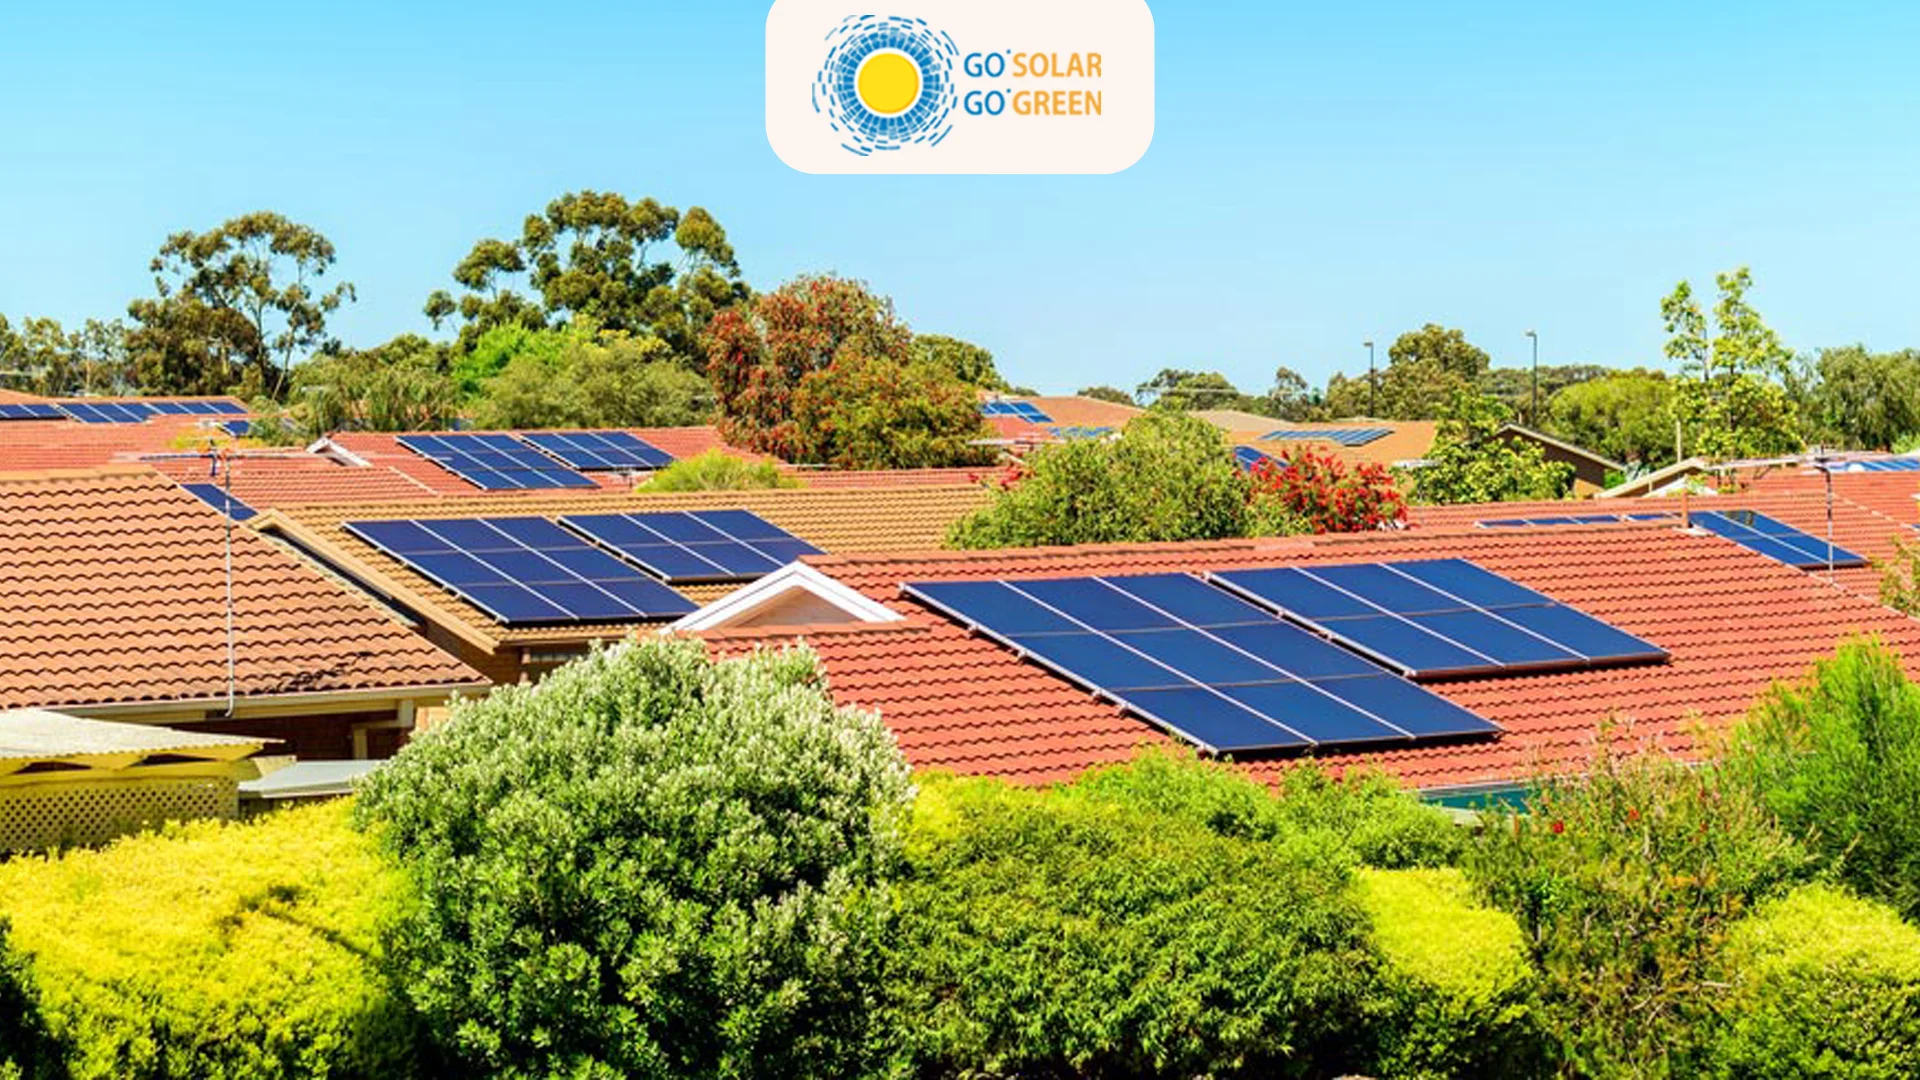 Residential Solar Panels in Geelong, Australia